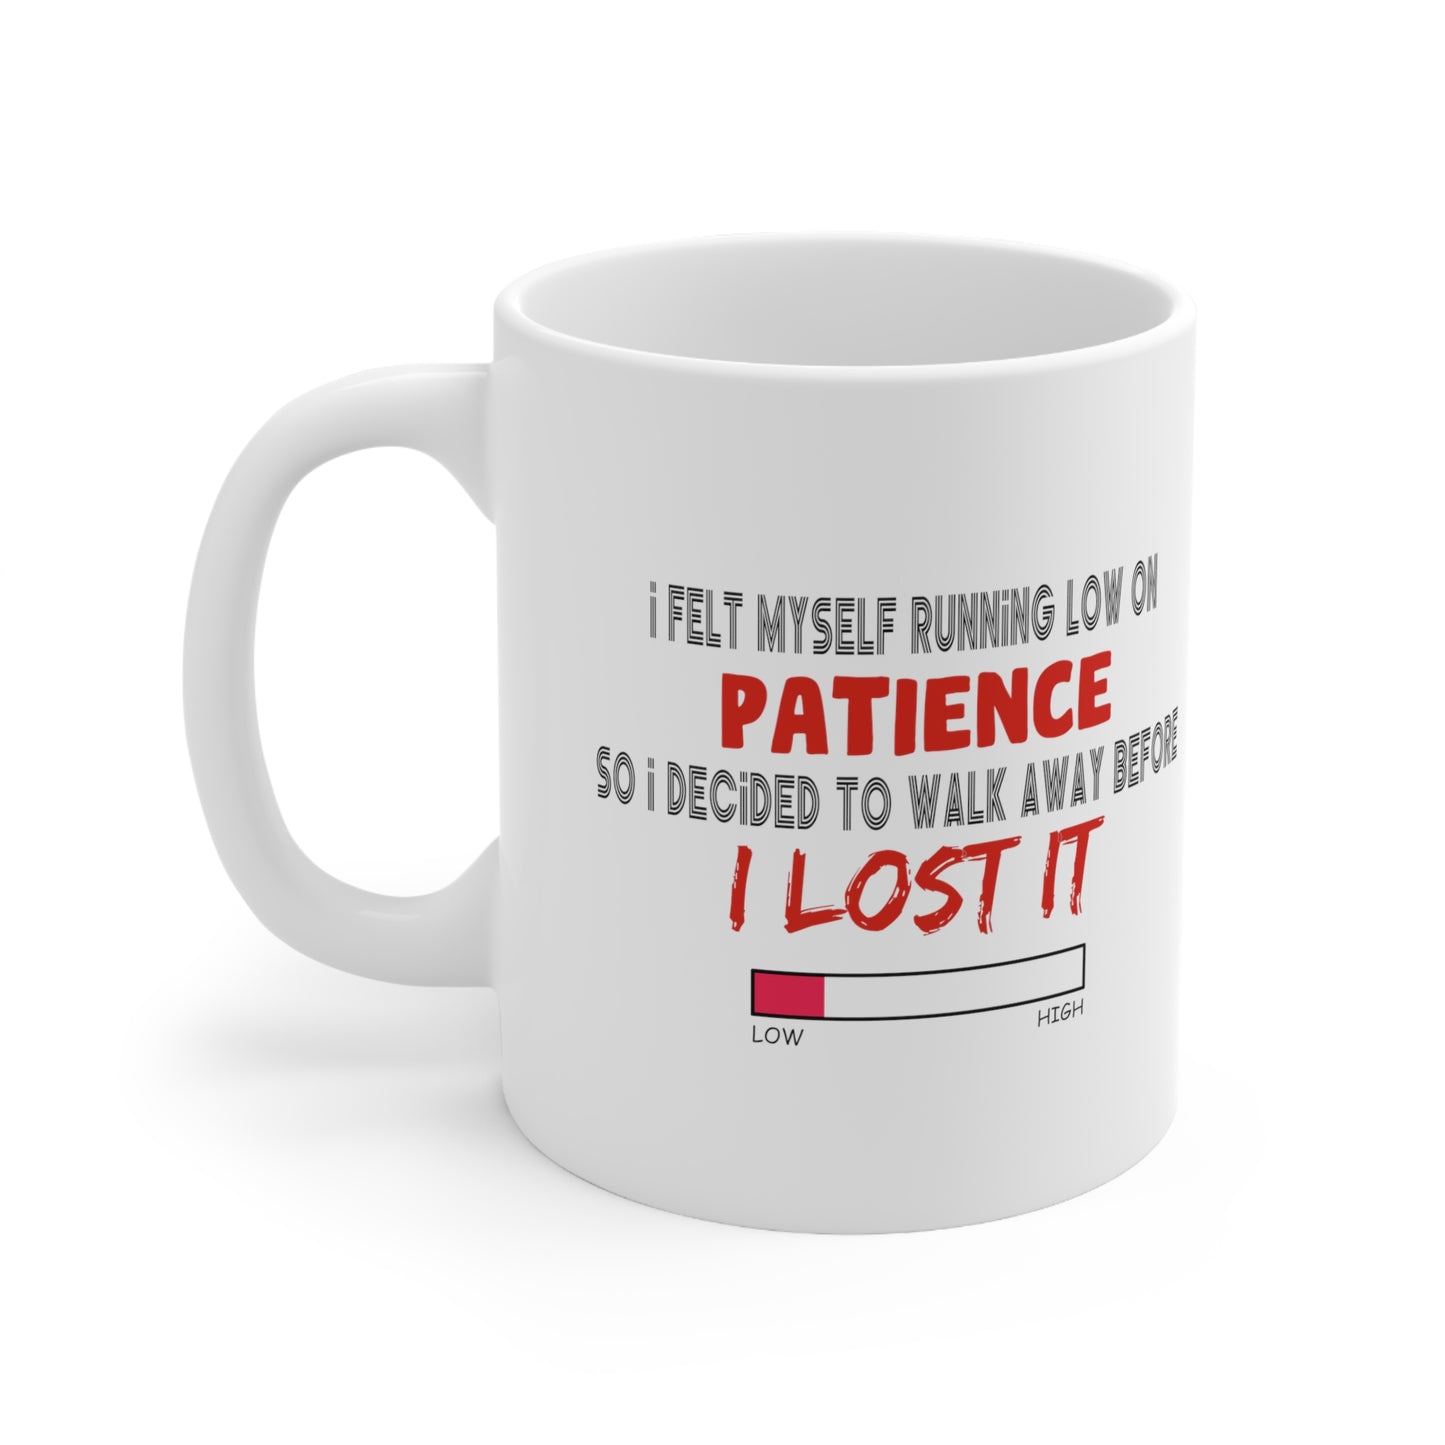 Funny Mug - Running Low On Patience